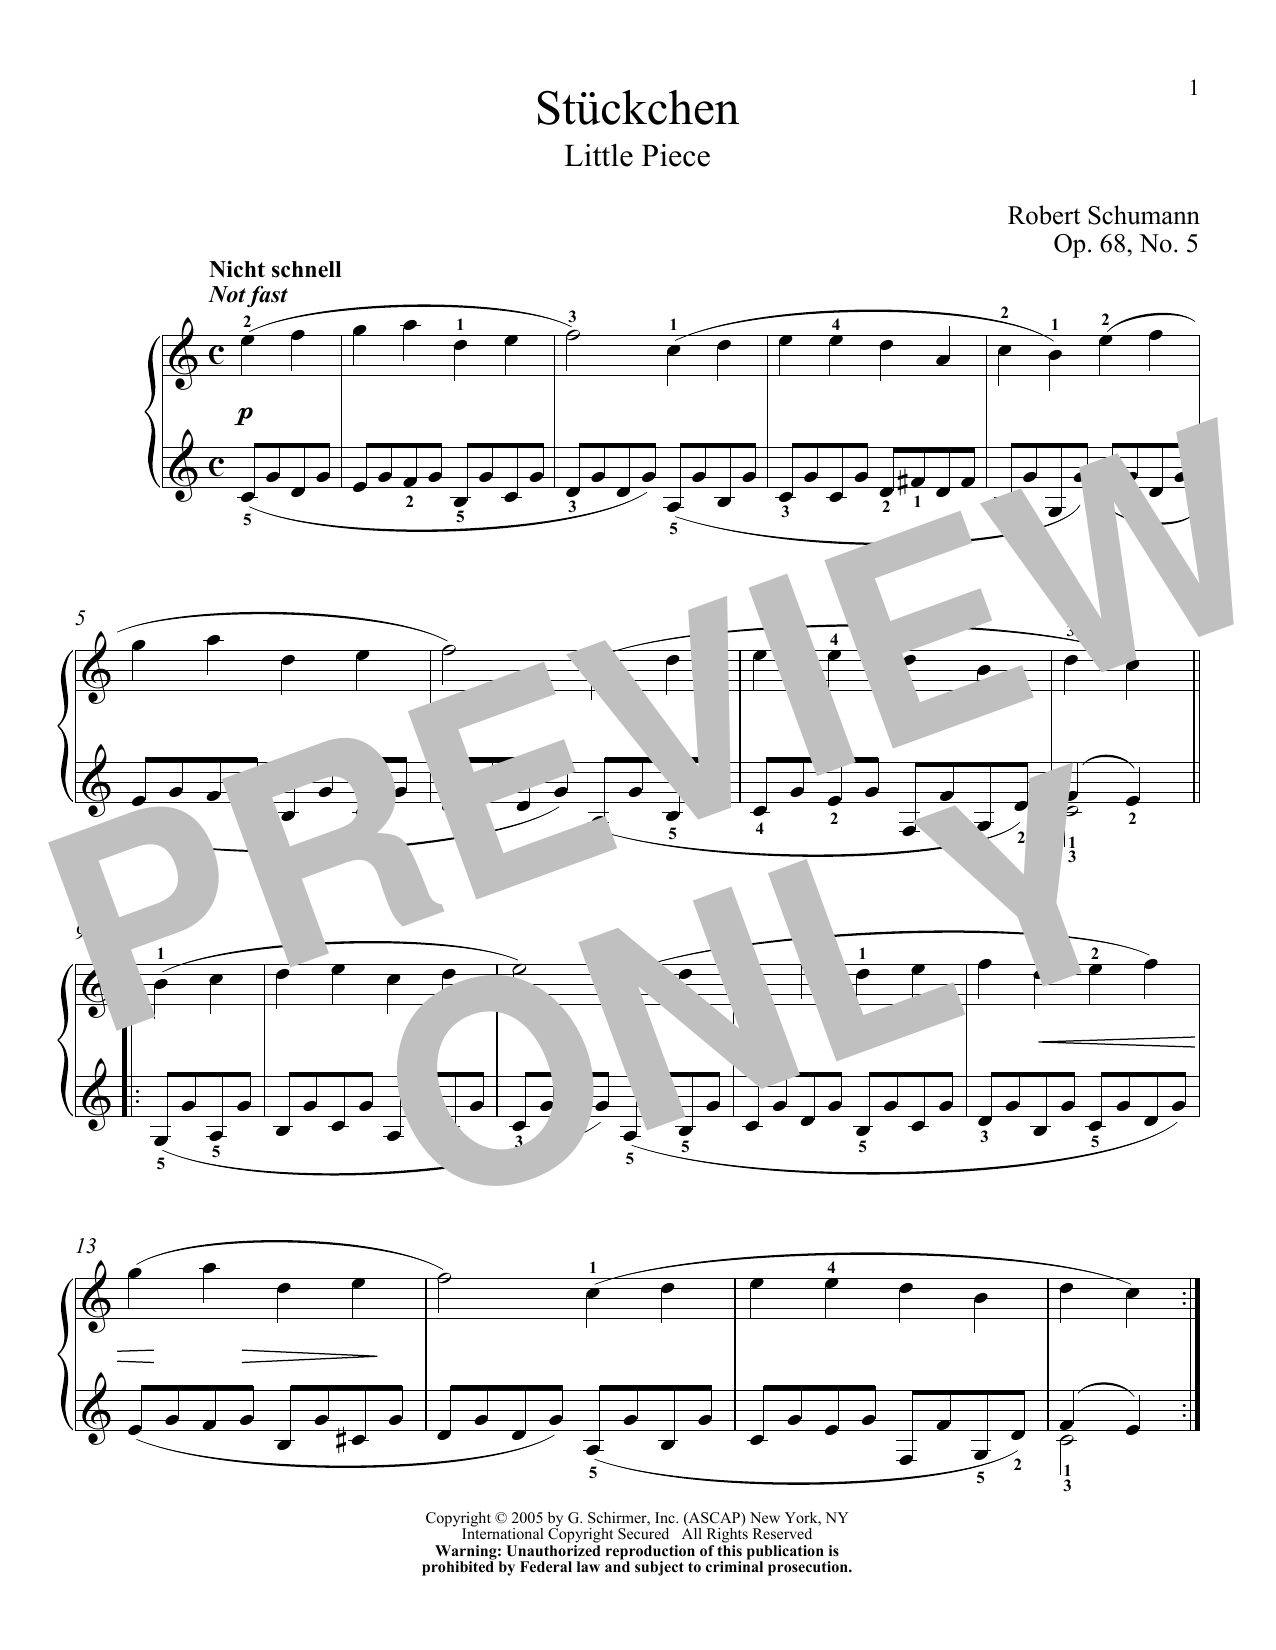 Robert Schumann Little Piece, Op. 68, No. 5 Sheet Music Notes & Chords for Piano - Download or Print PDF